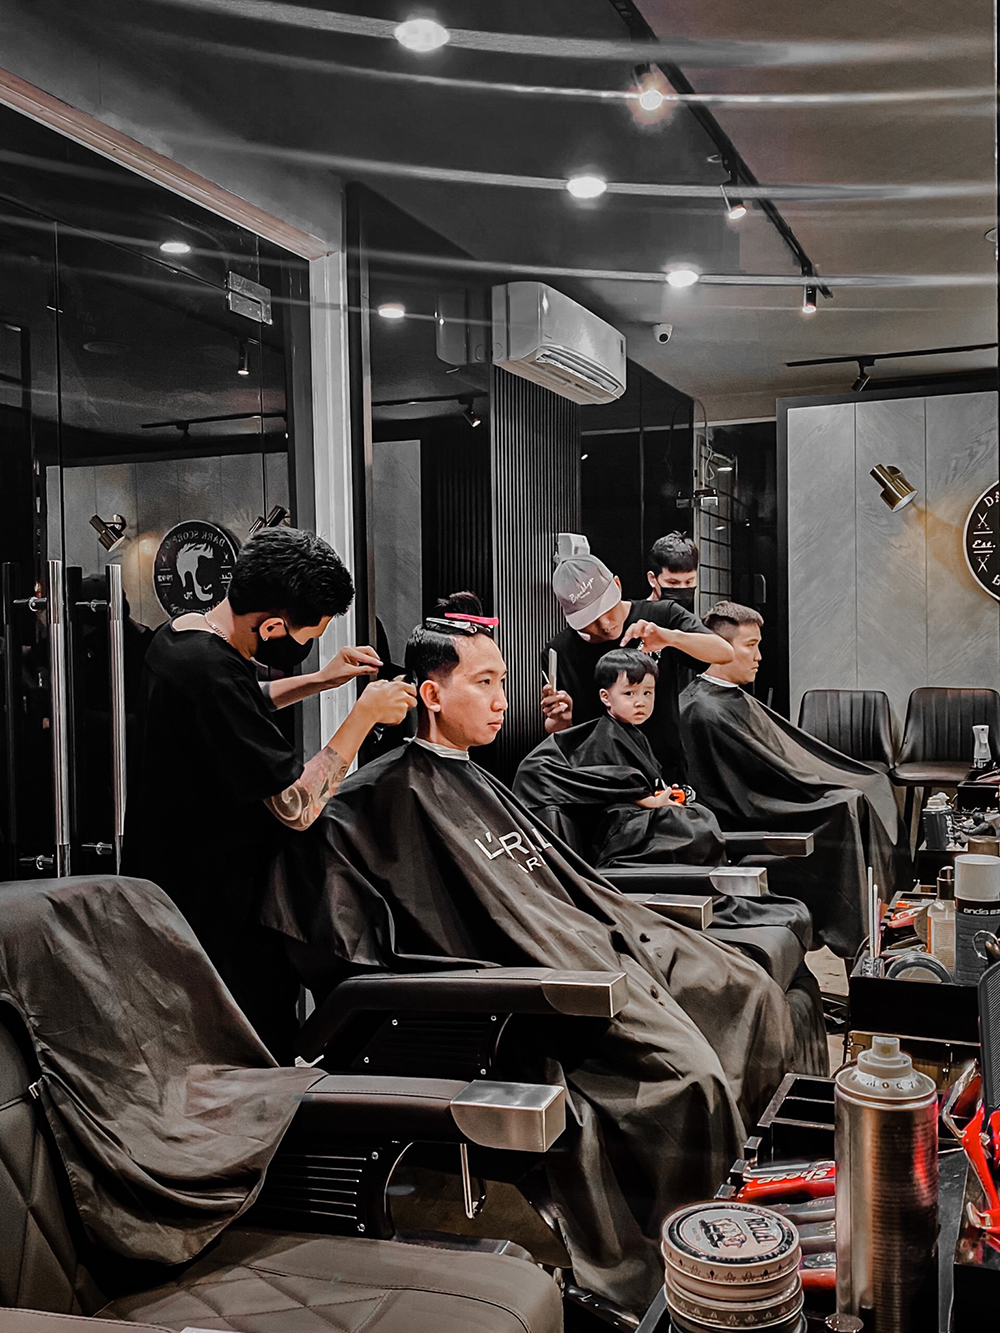 dong phuc dark scorpio - barber shop